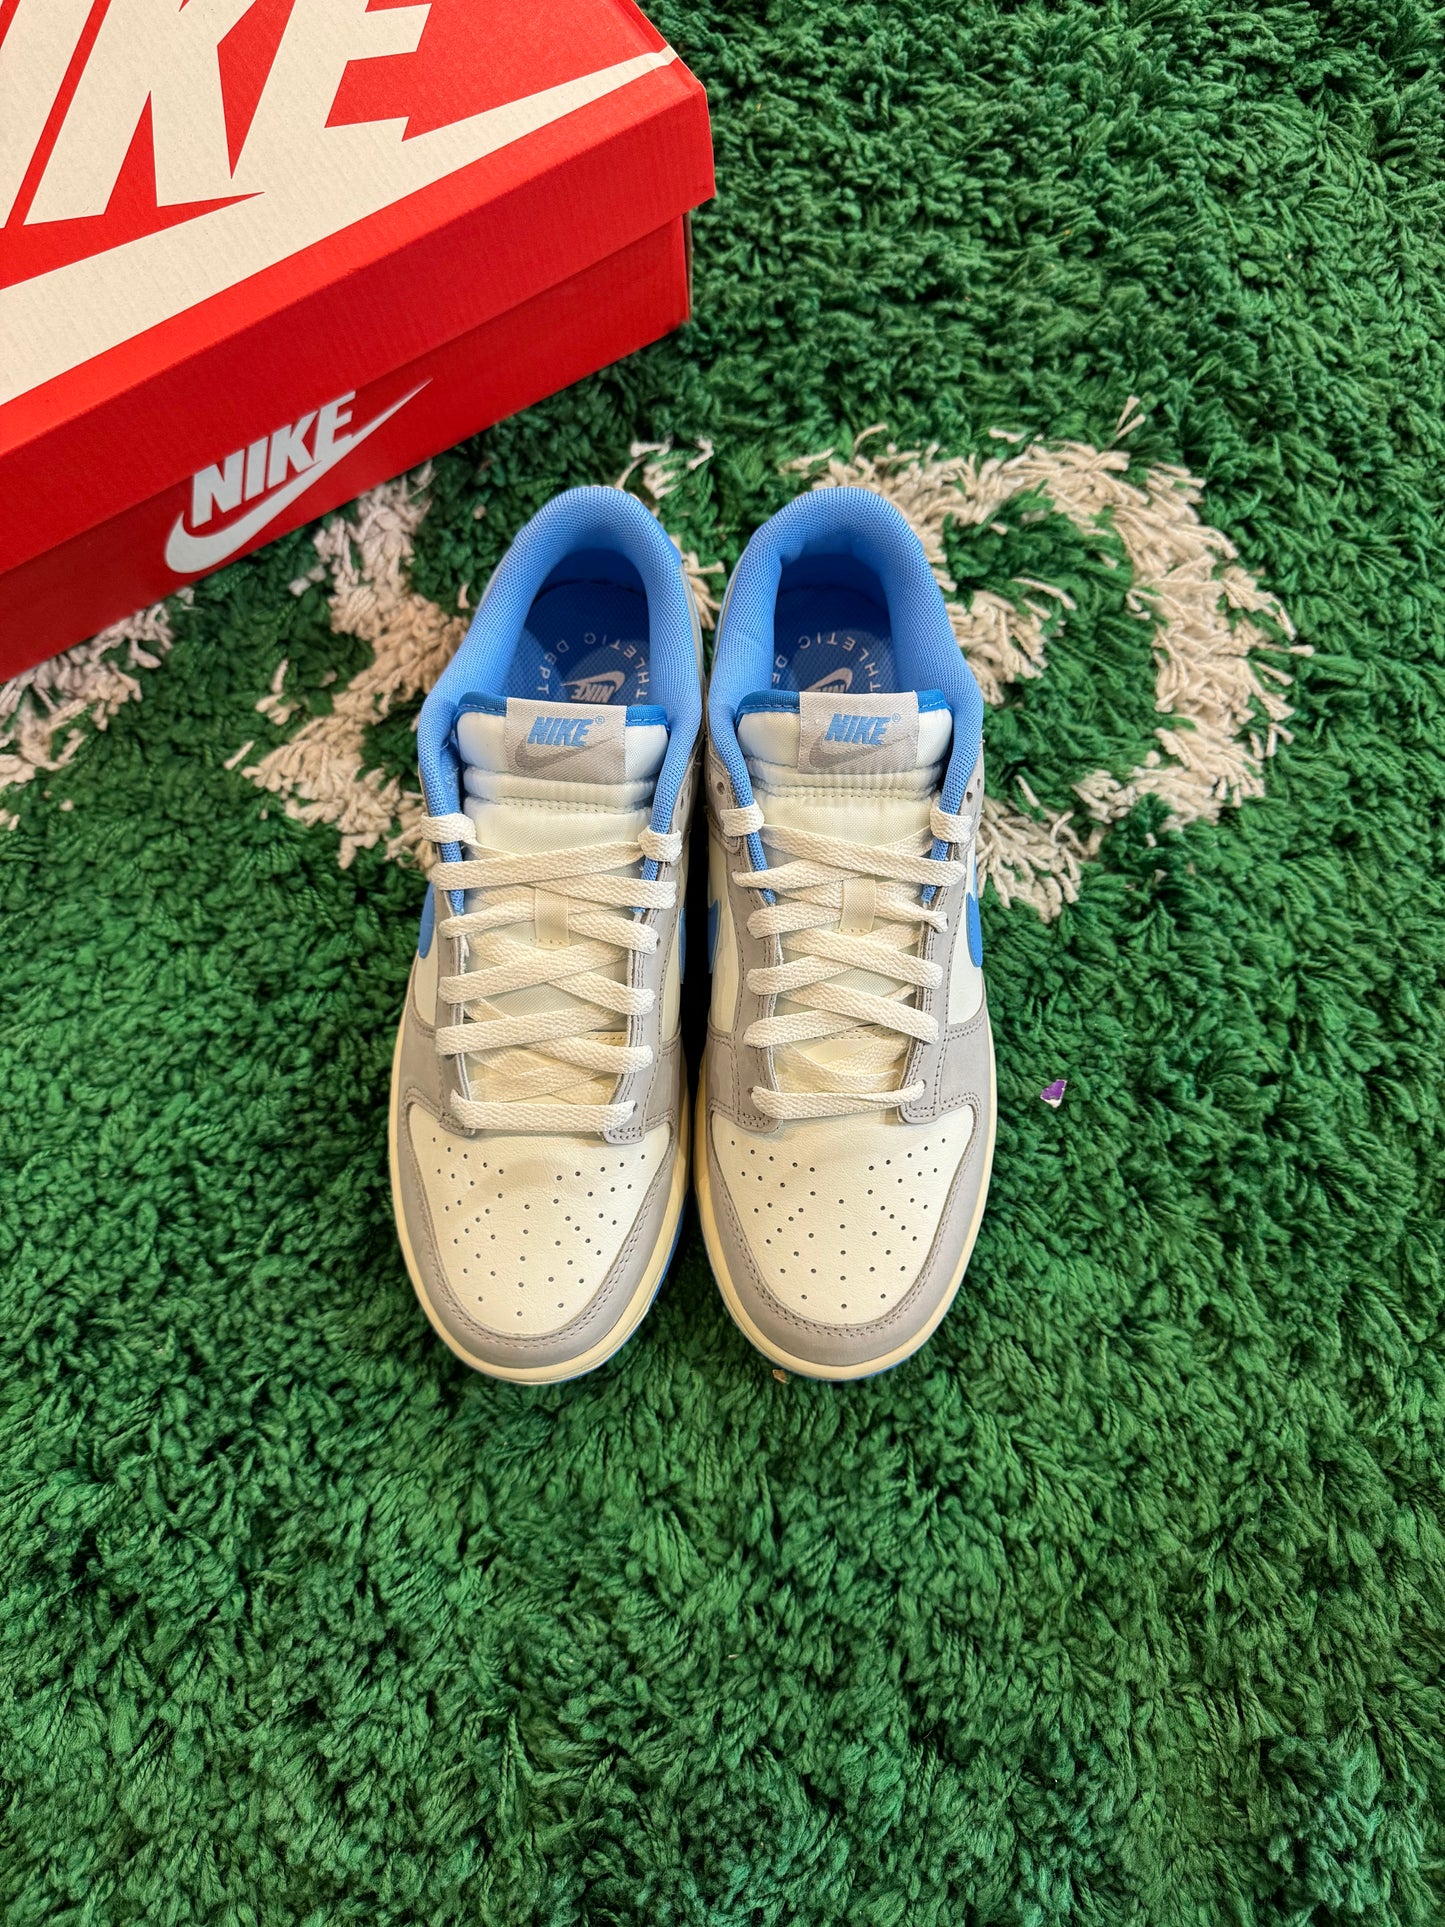 Nike Dunk Low “Athletic Department University Blue”